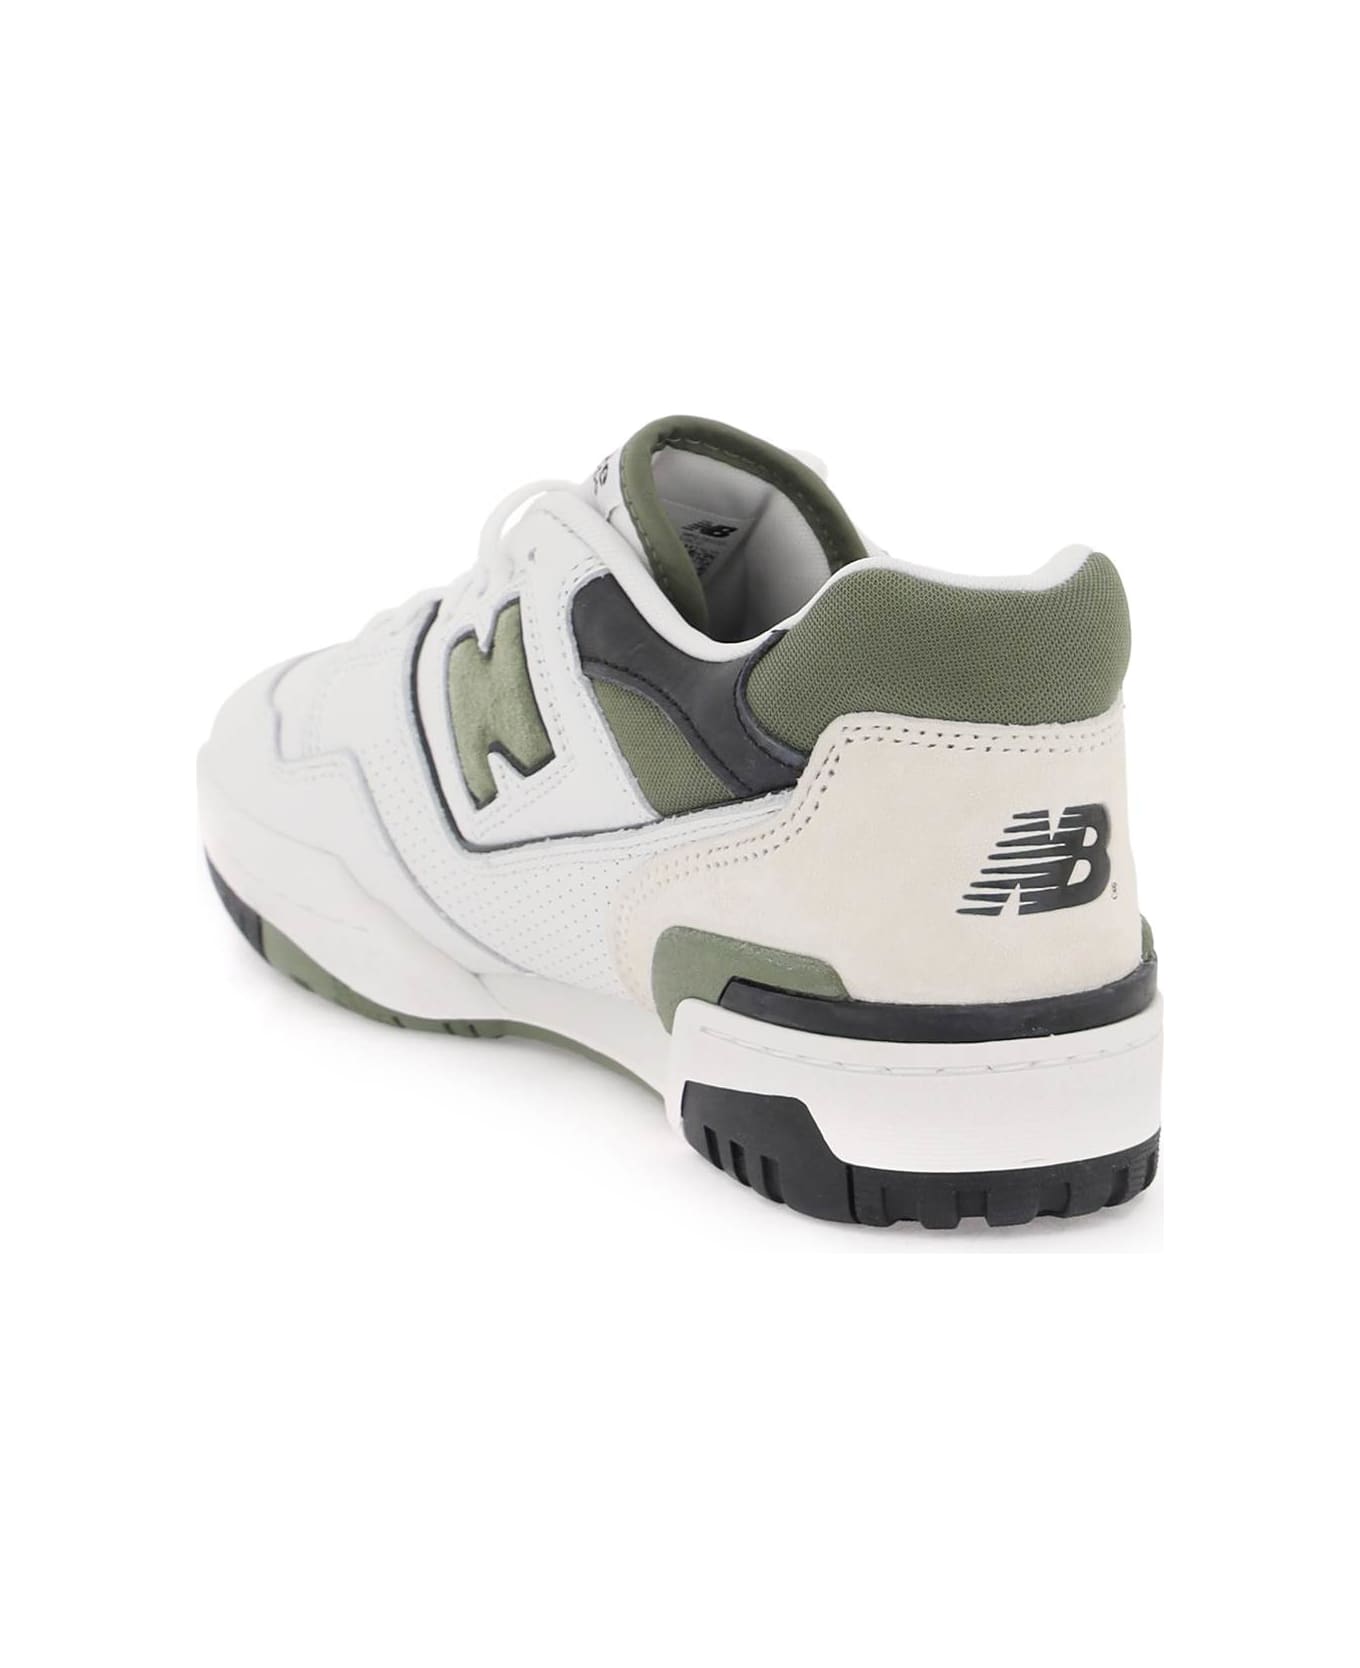 New Balance 550 Sneakers - WHITE GREEN (White) スニーカー